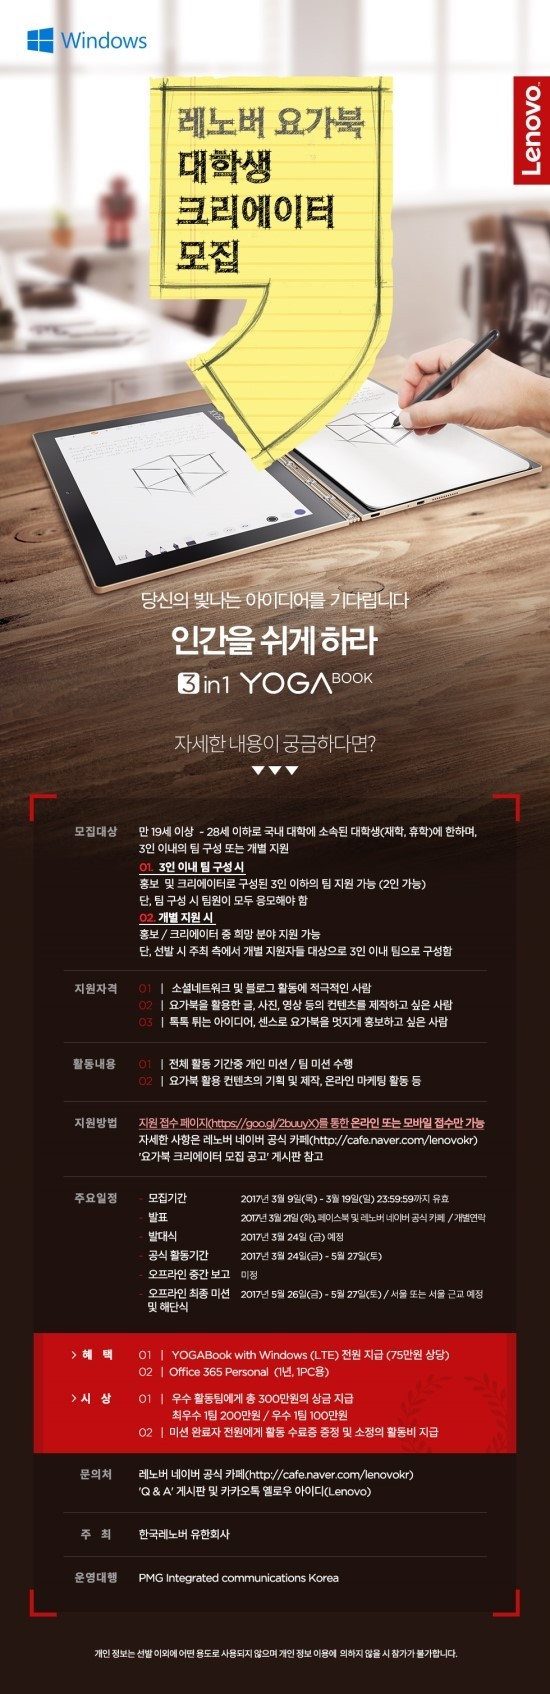 yogabook_contest_0309.jpg?type=w740